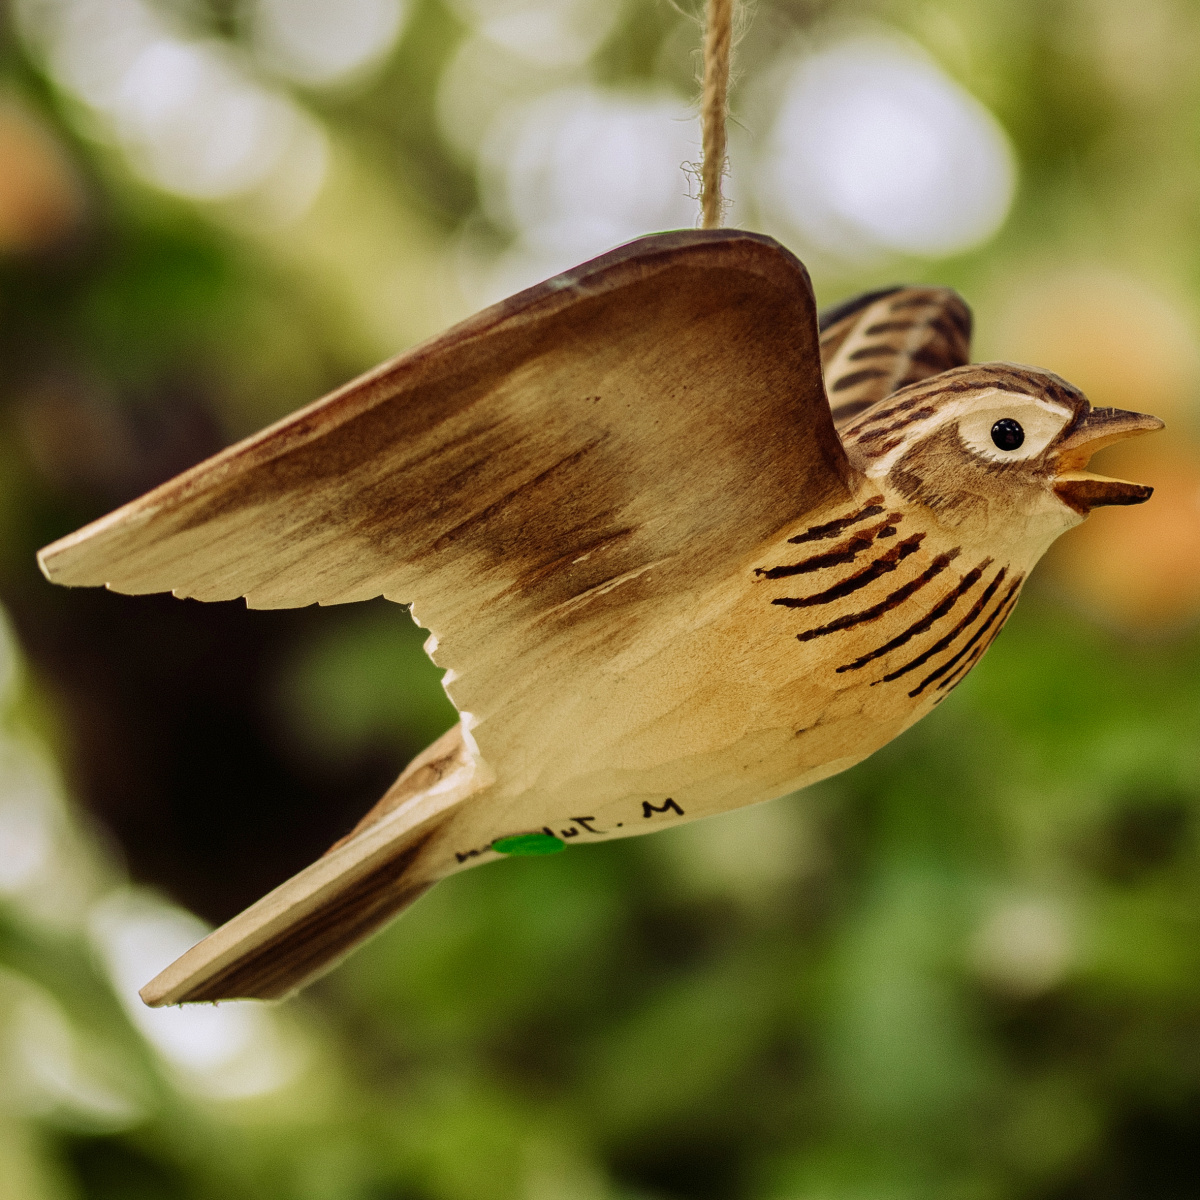 Wildlife Garden træfugl - sanglærke, flyvende